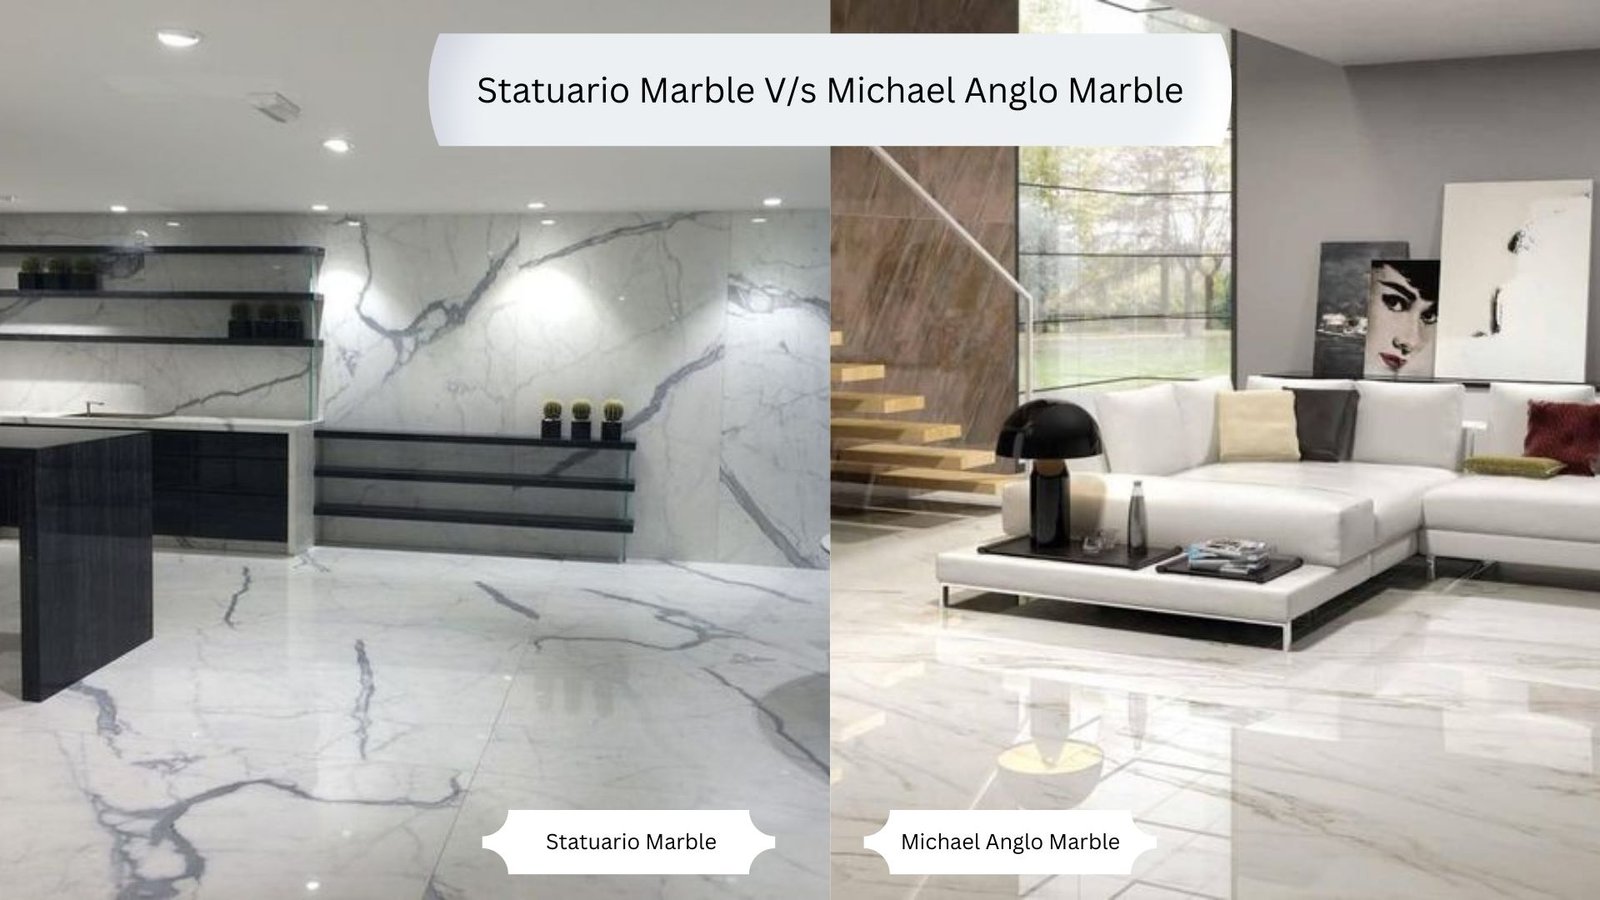 Michael Anglo Marble vs. Statuario Marble